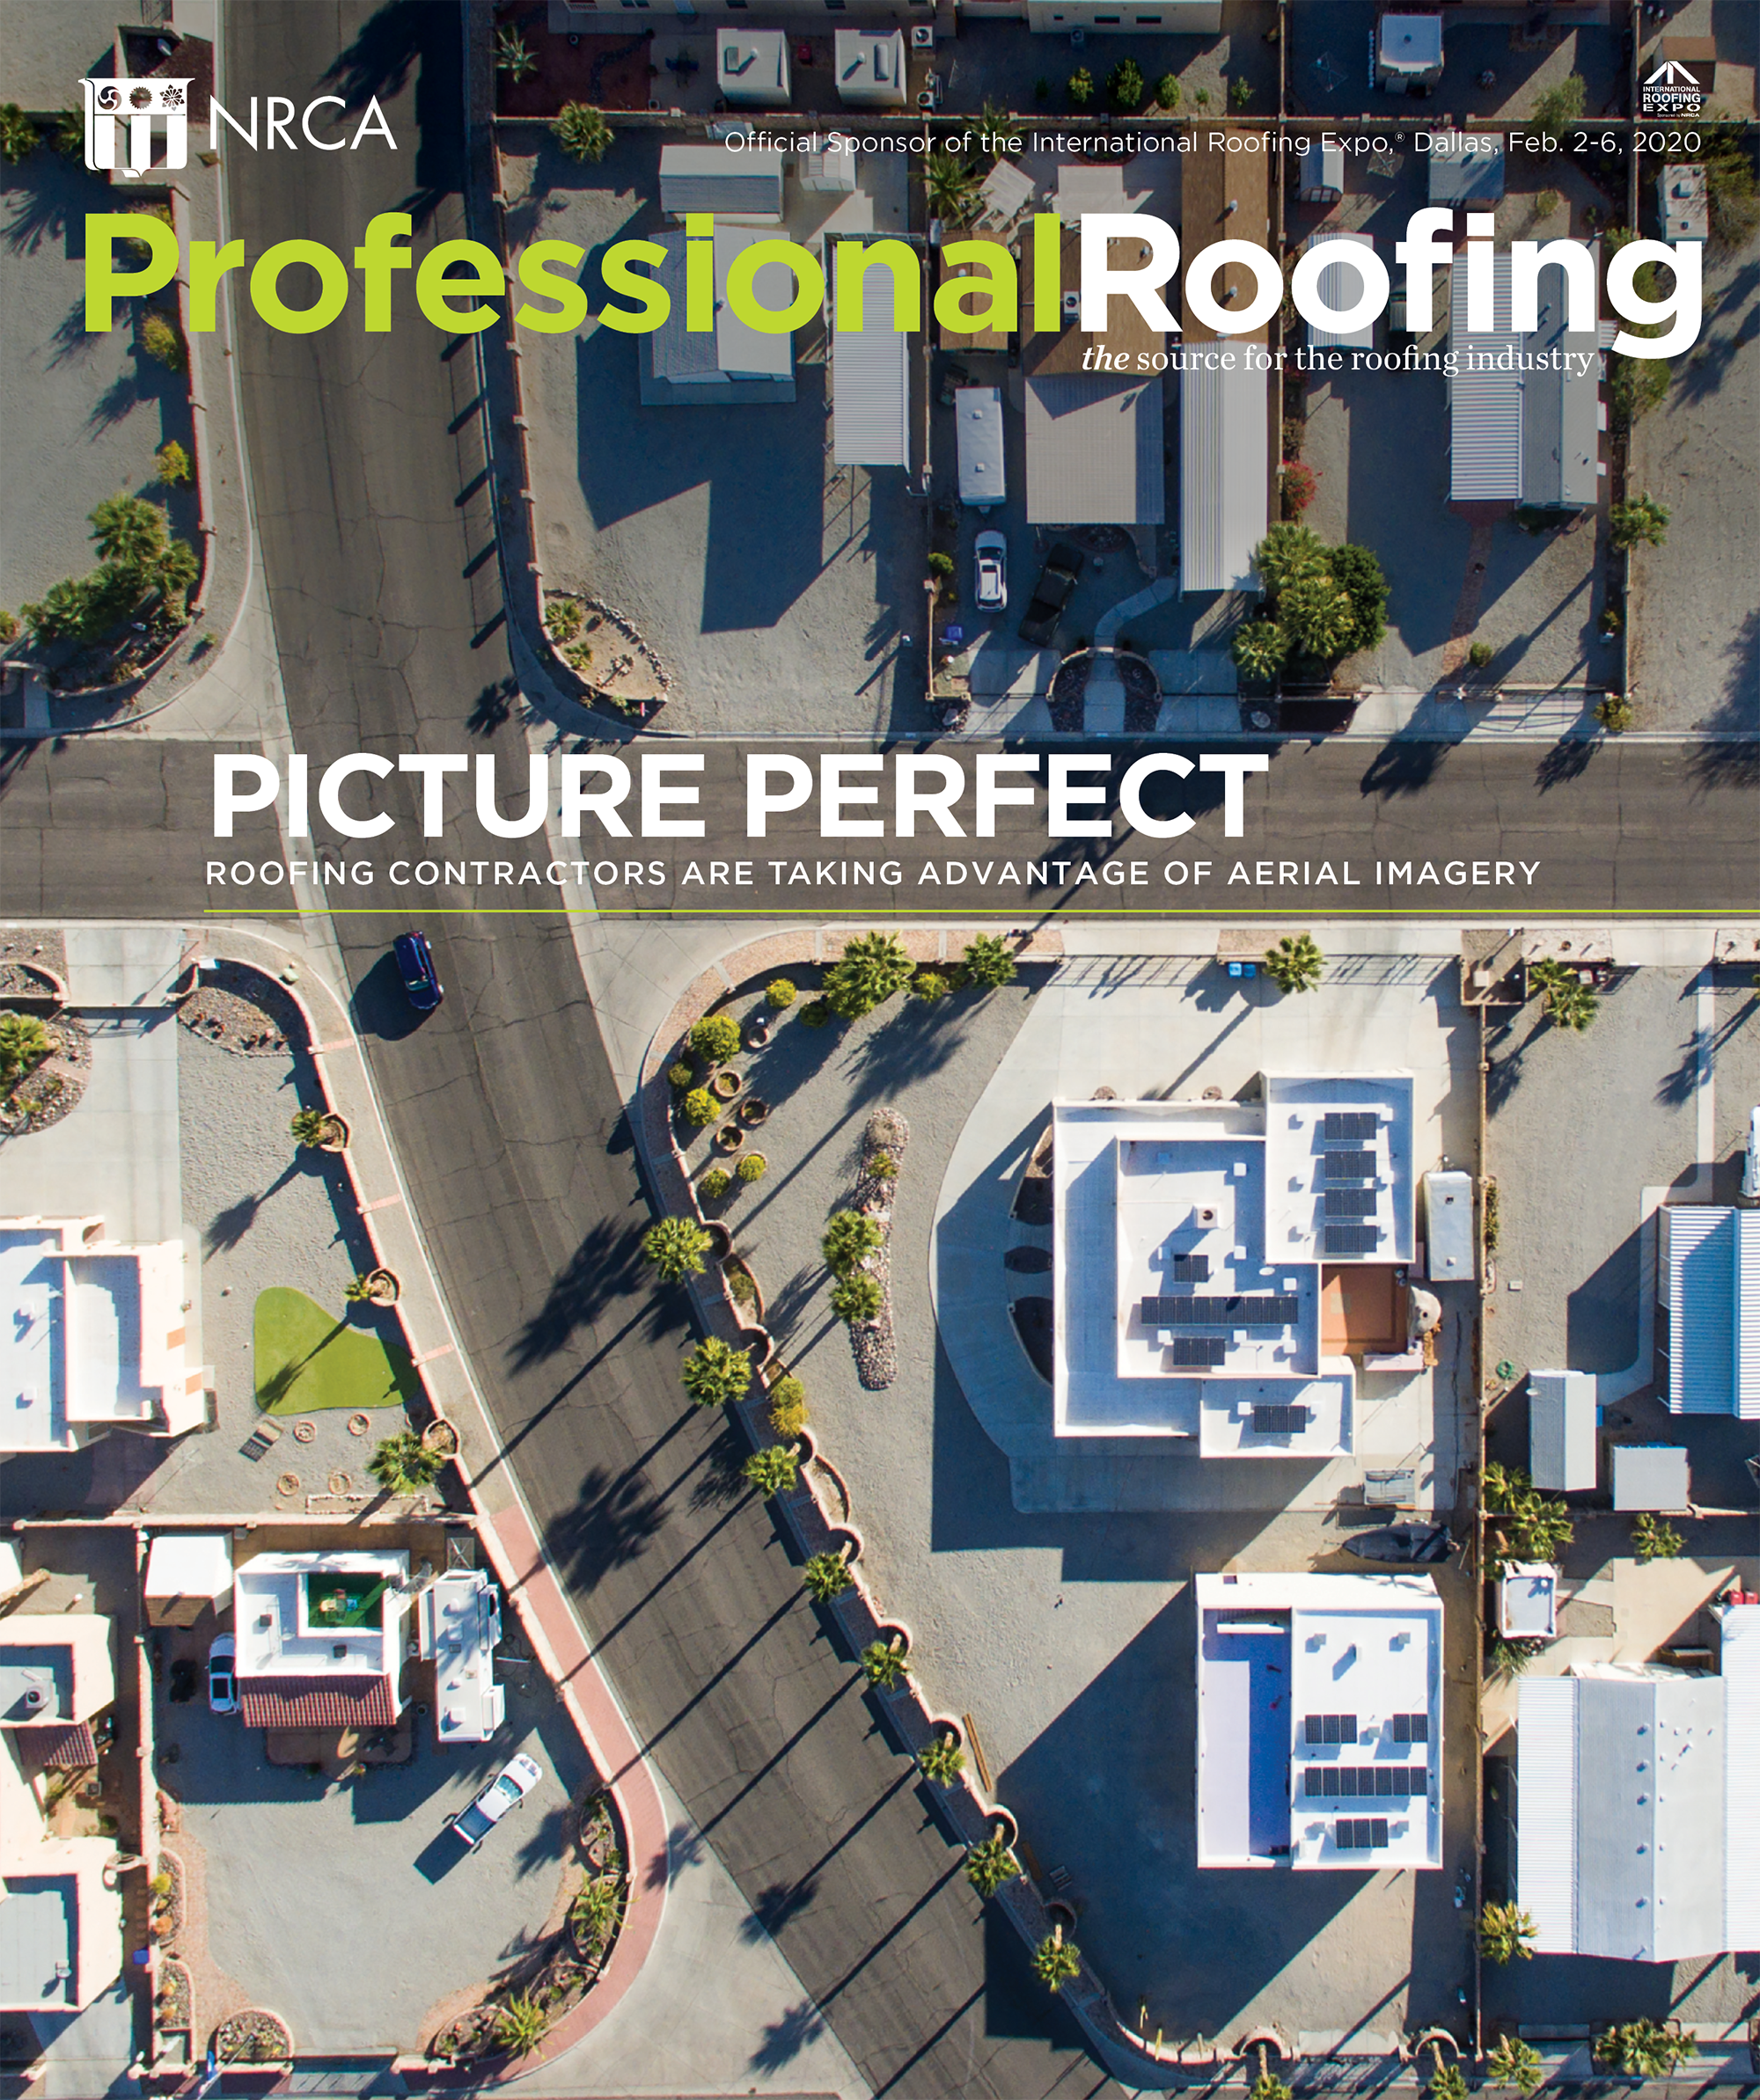 Professional Roofing Magazine 12/1/2019